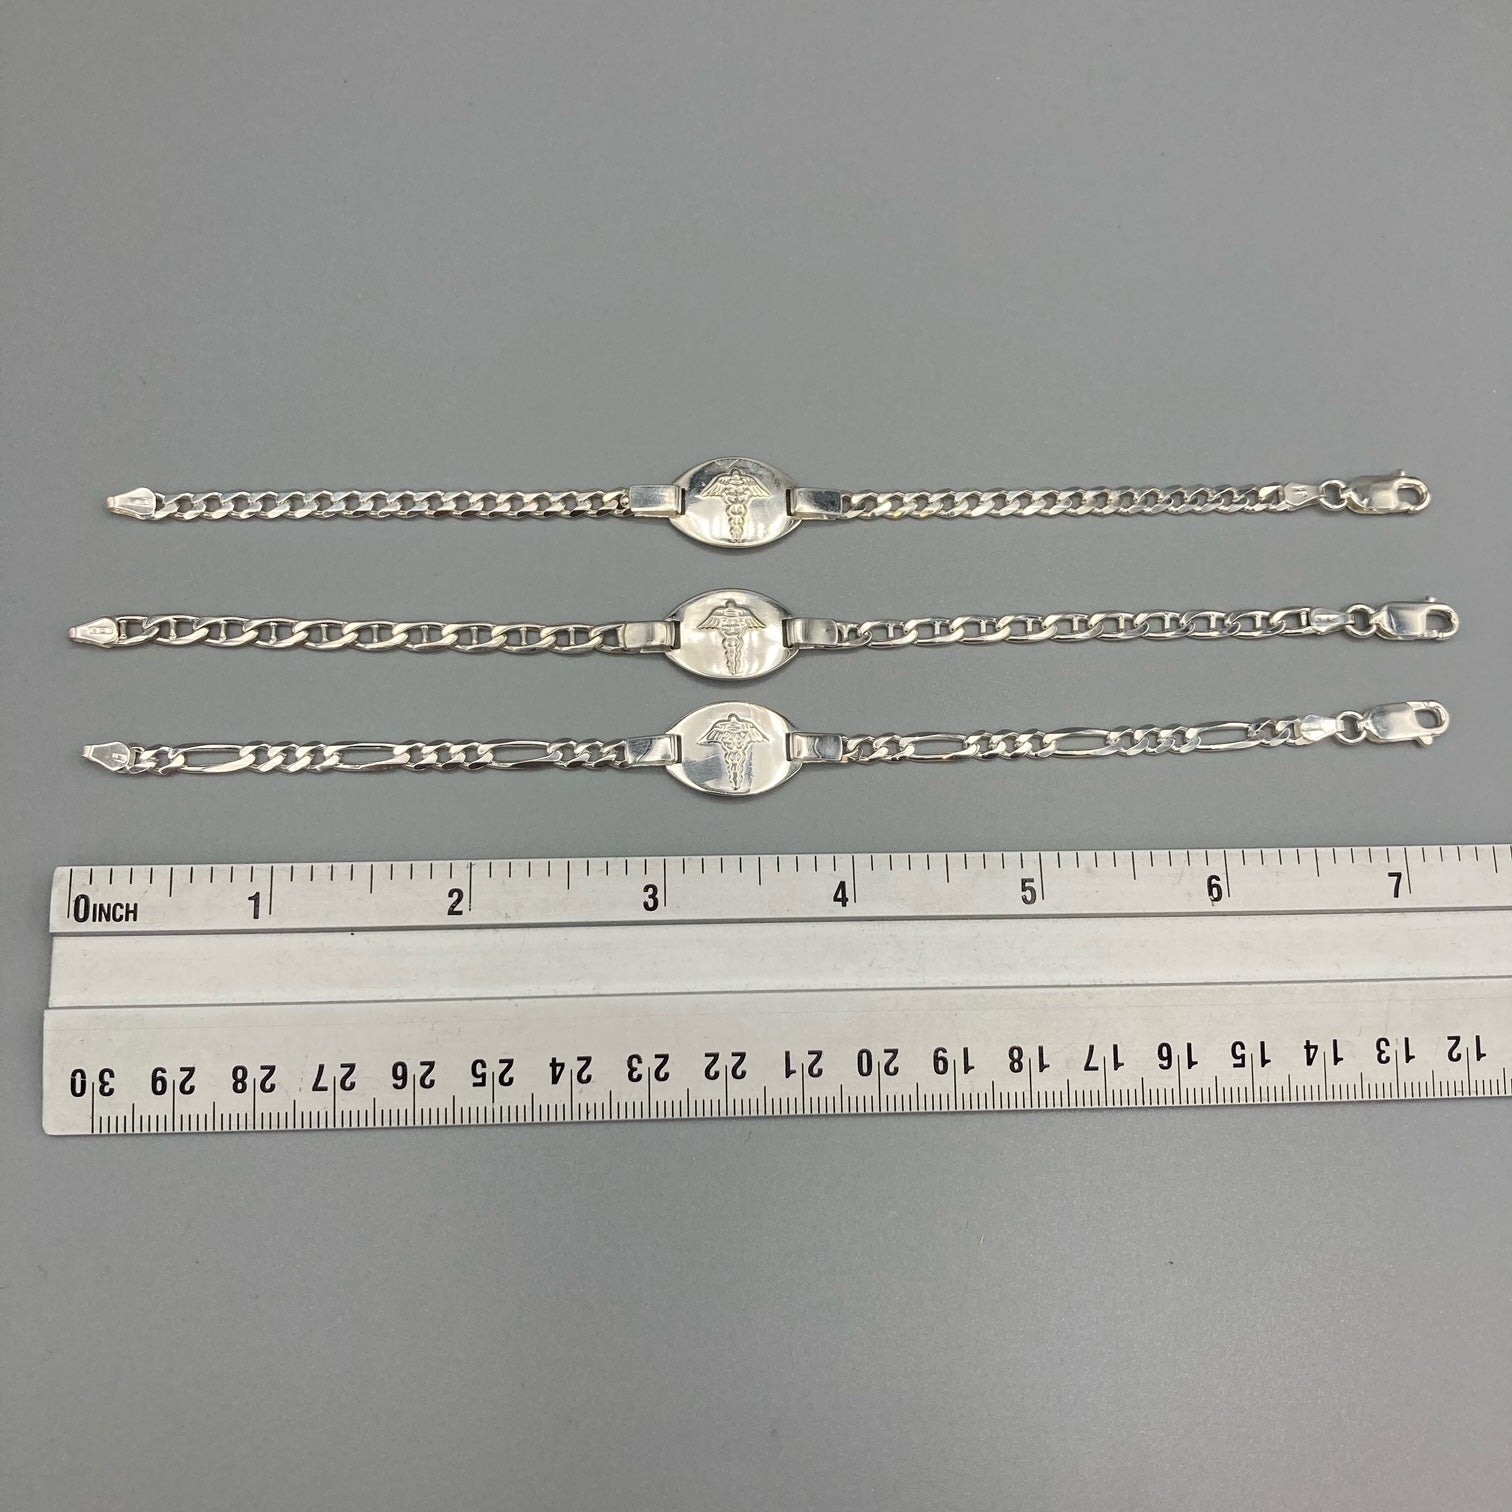 Sterling Silver Medic Alert Bracelet With Custom Engraving Included